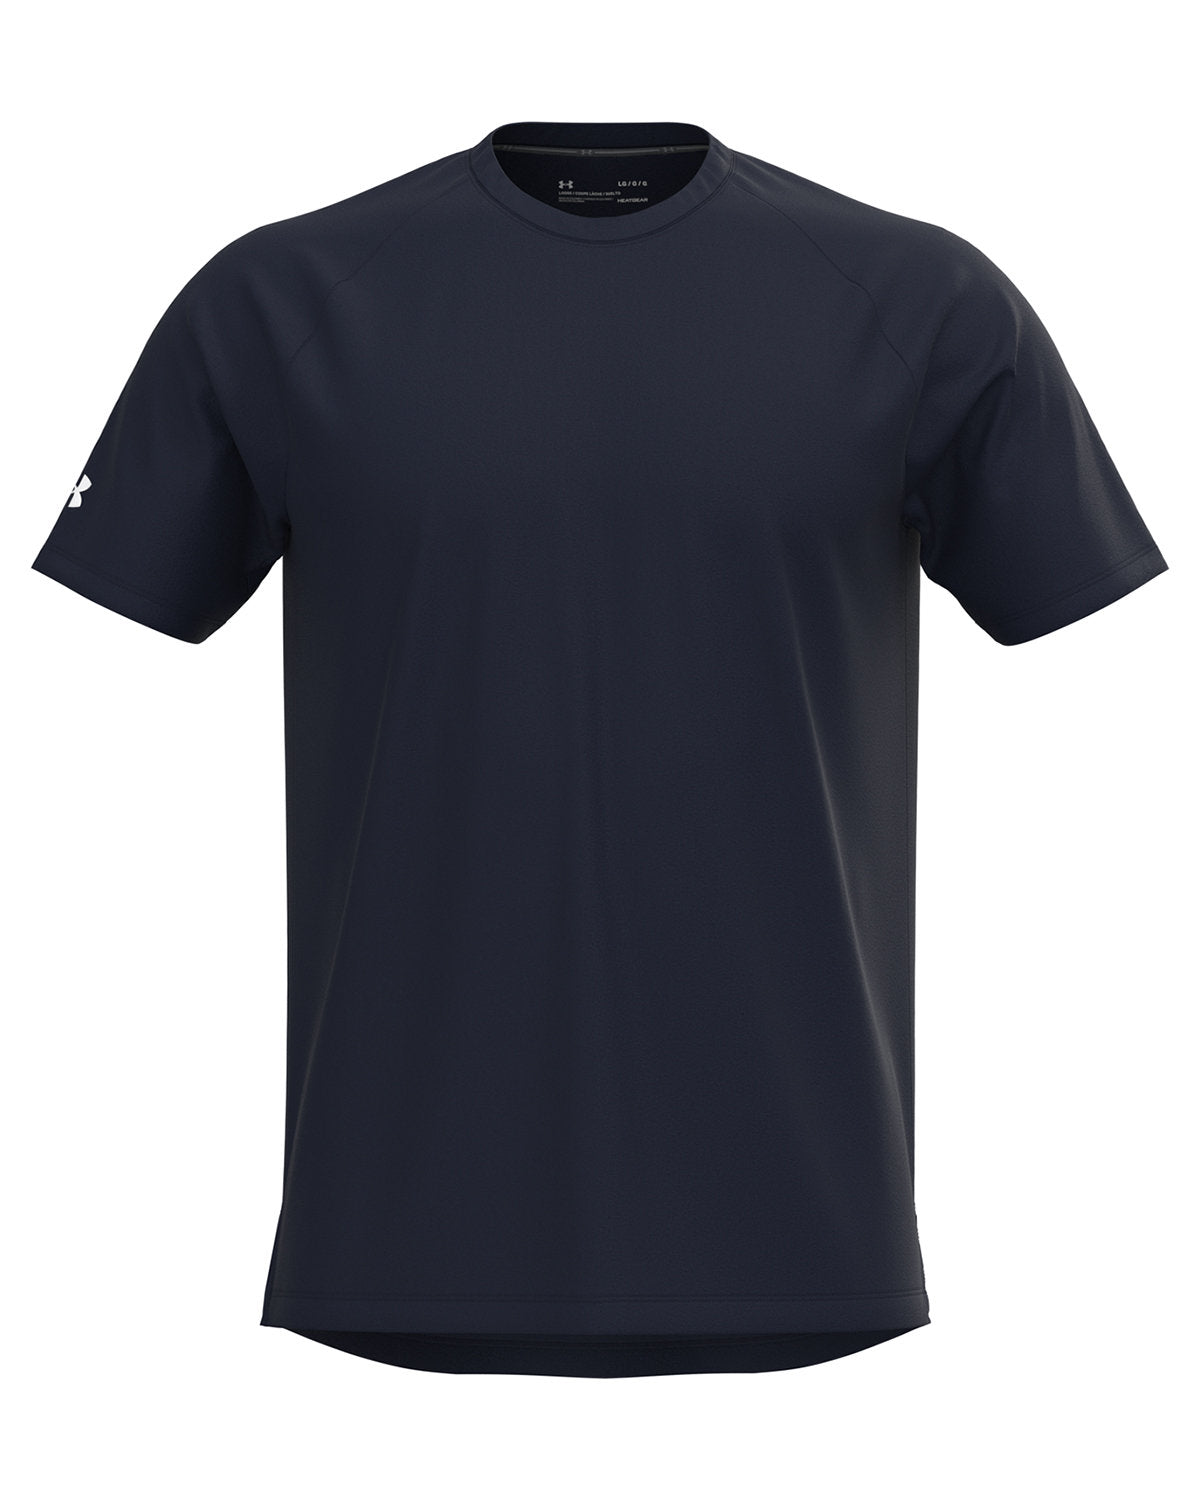 UNDER ARMOUR Men's Athletic 2.0 Raglan T-Shirt